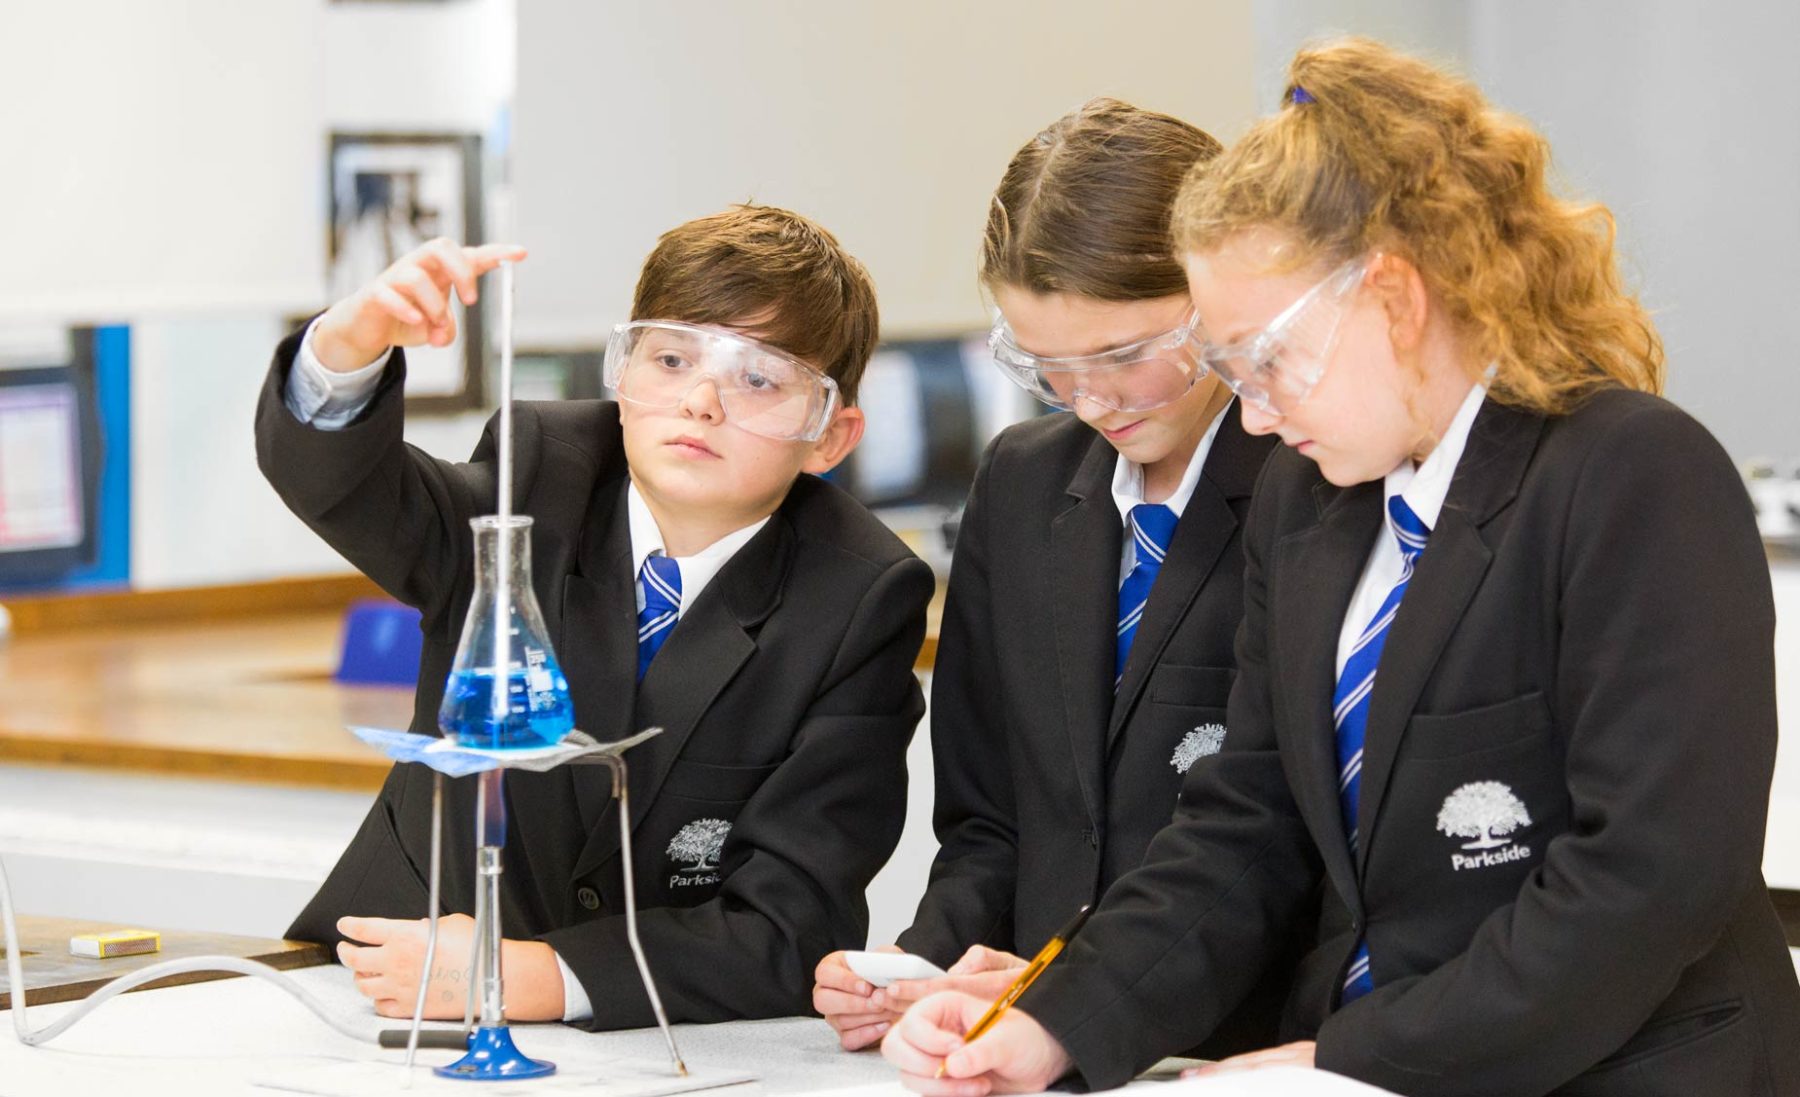 Three children in school uniform doing science experiment in class